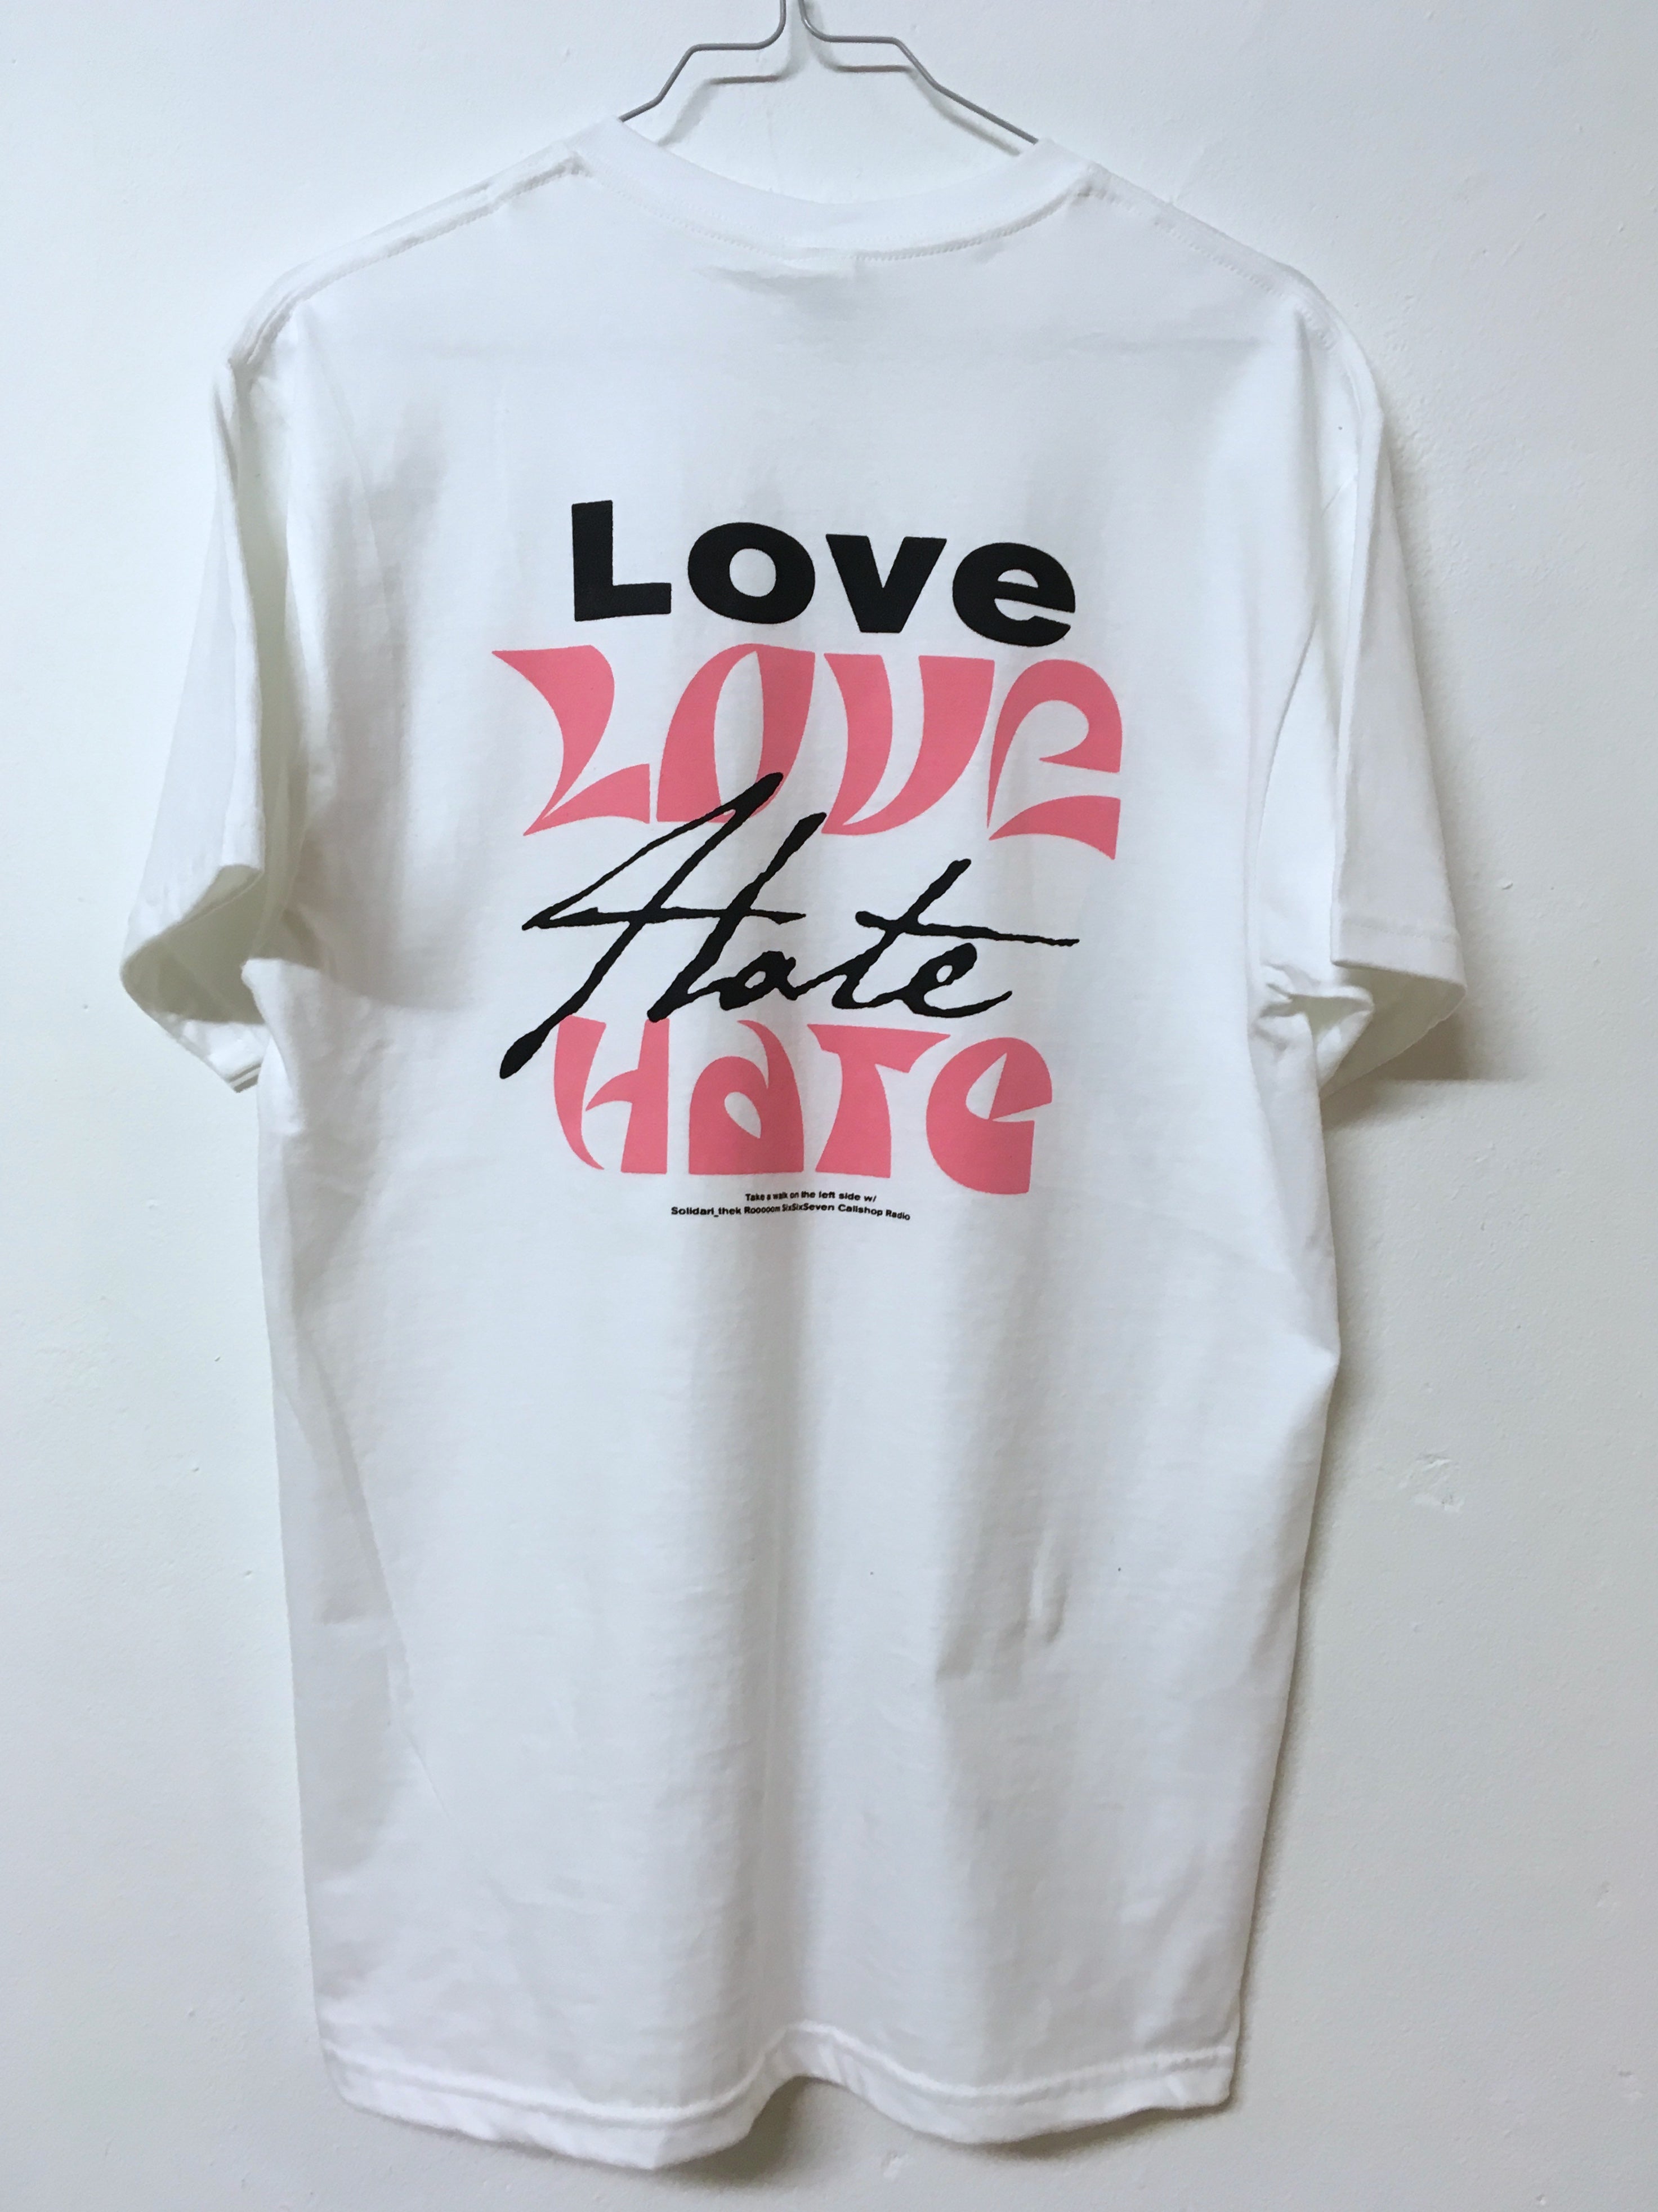 Silence Kills - "Love Love Hate Hate" T-Shirt kurzärmlig